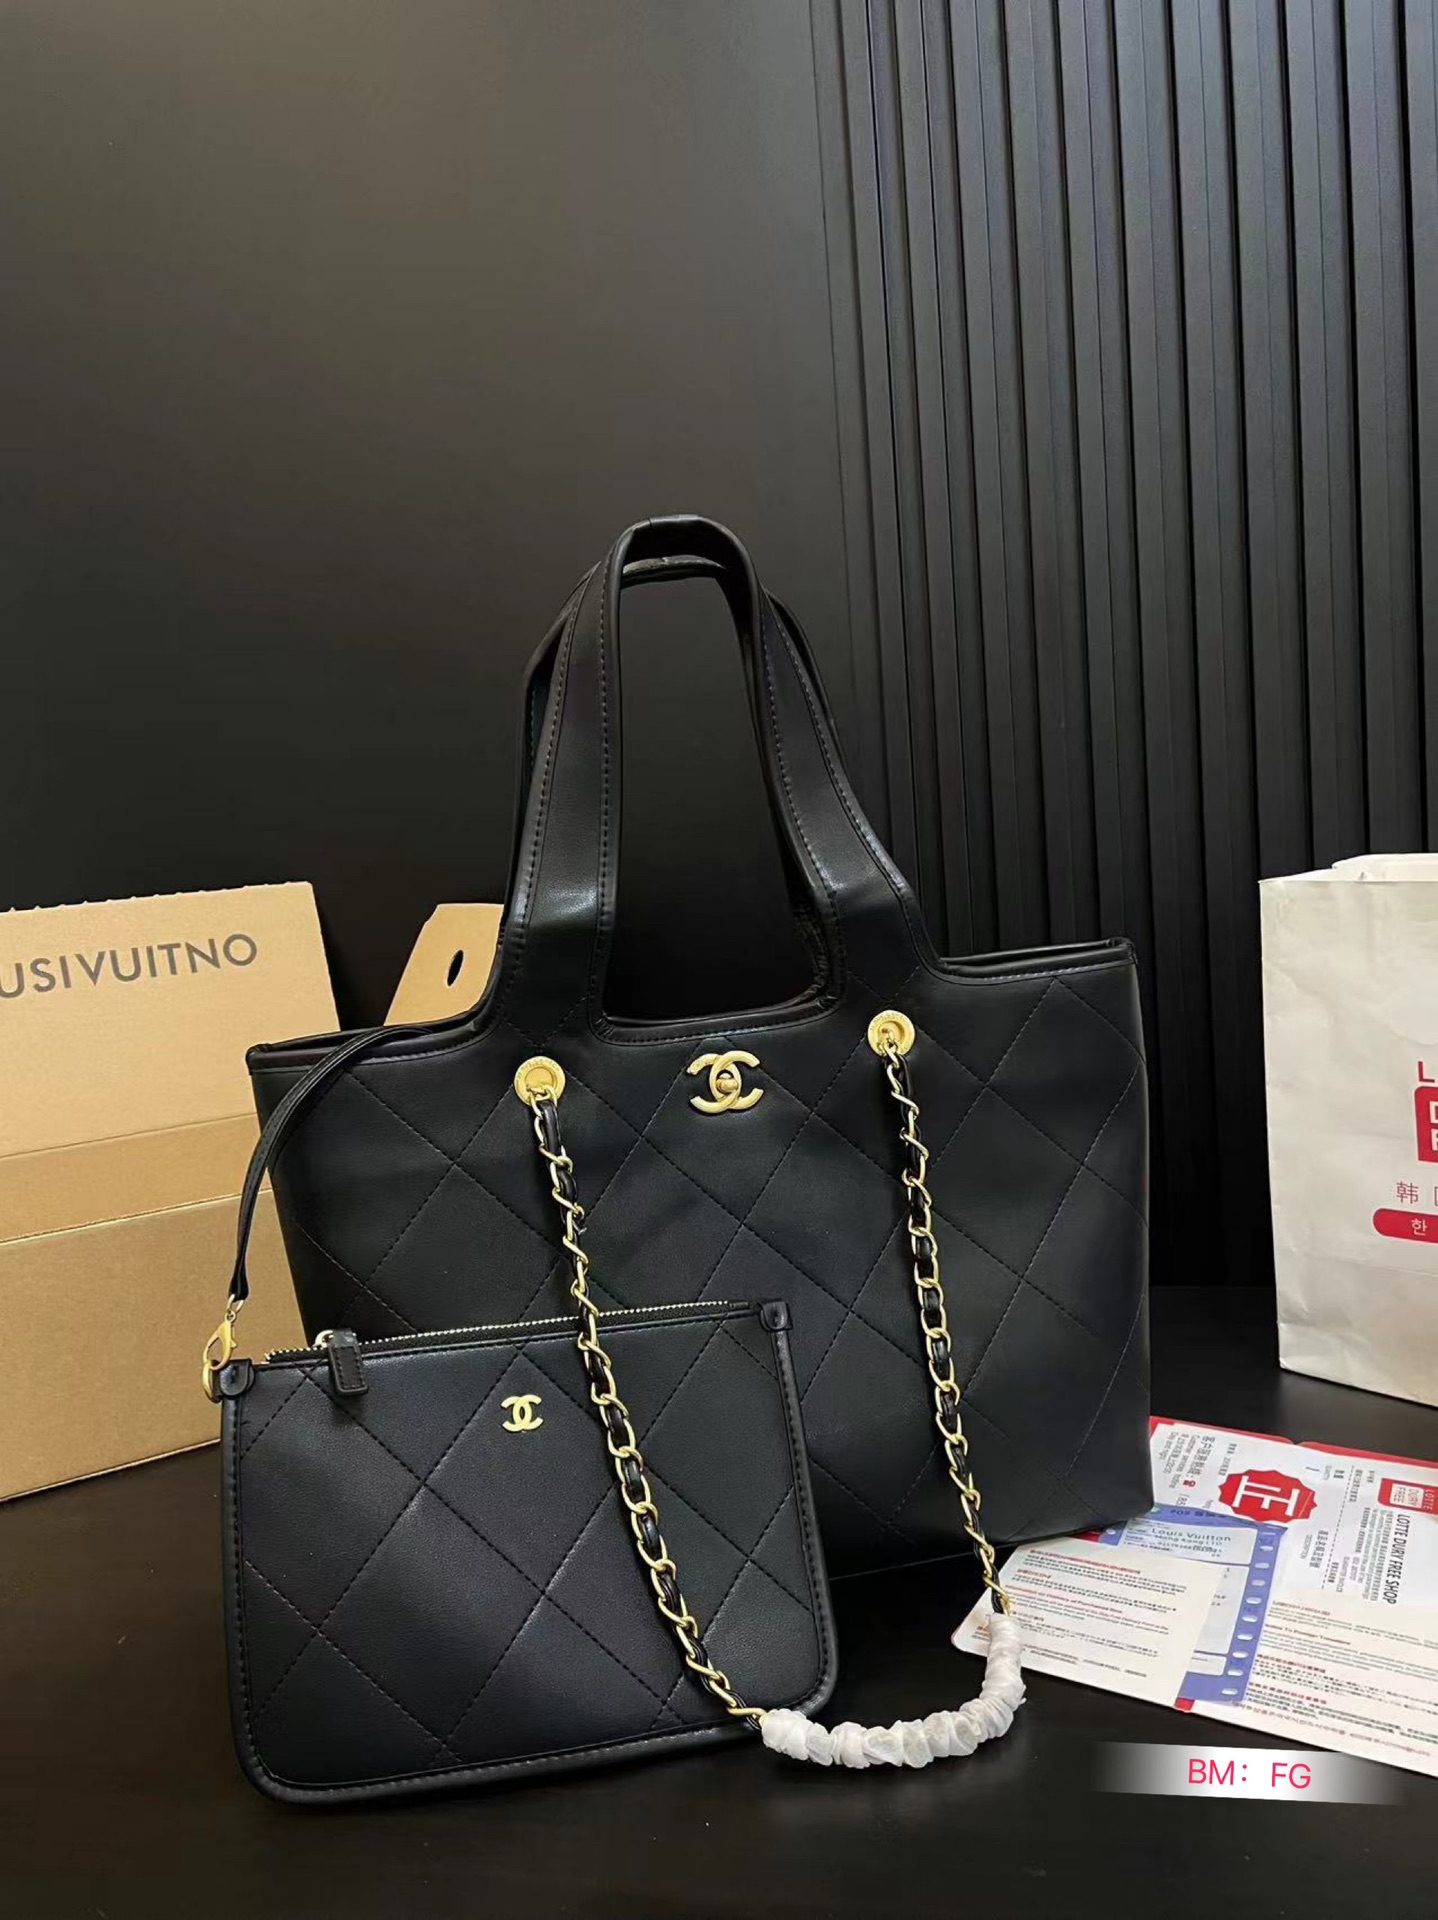 Chanel Handbags Tote Bags